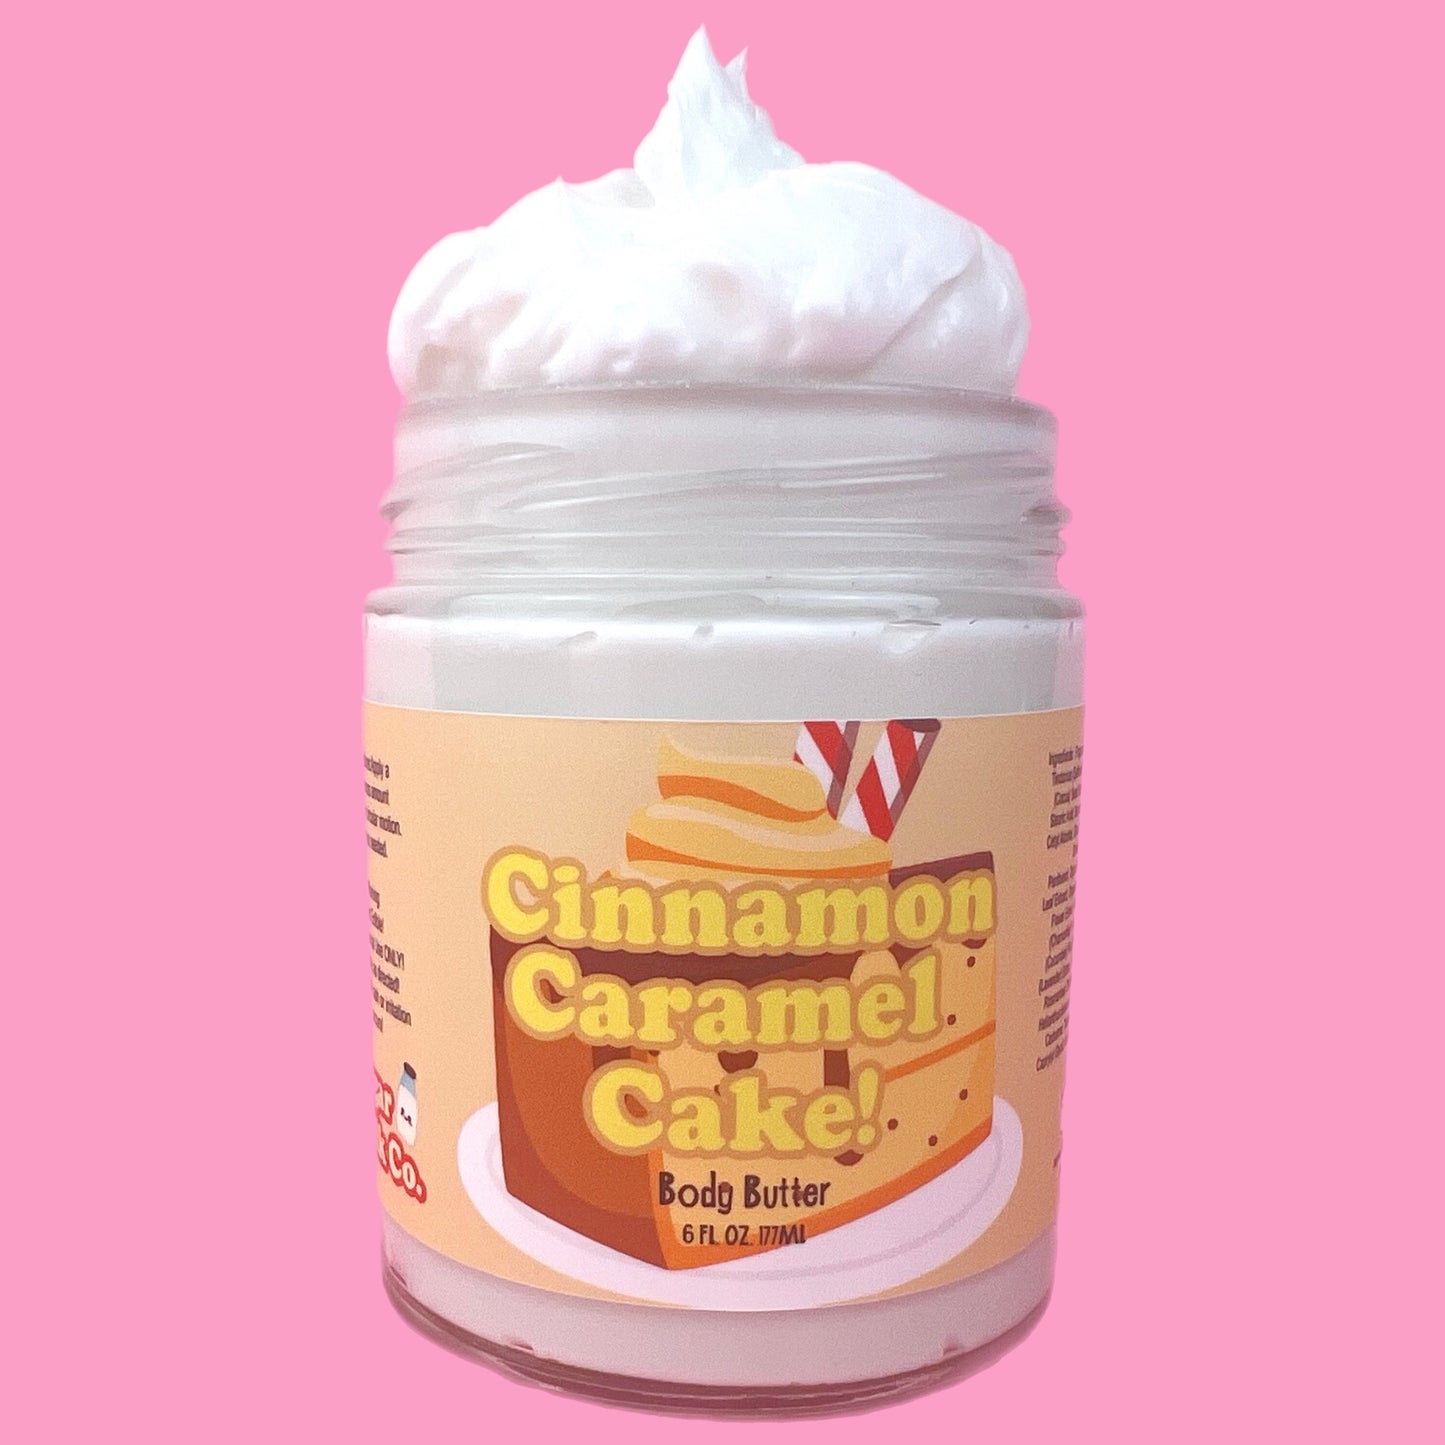 Cinnamon Caramel Cake Body Butter